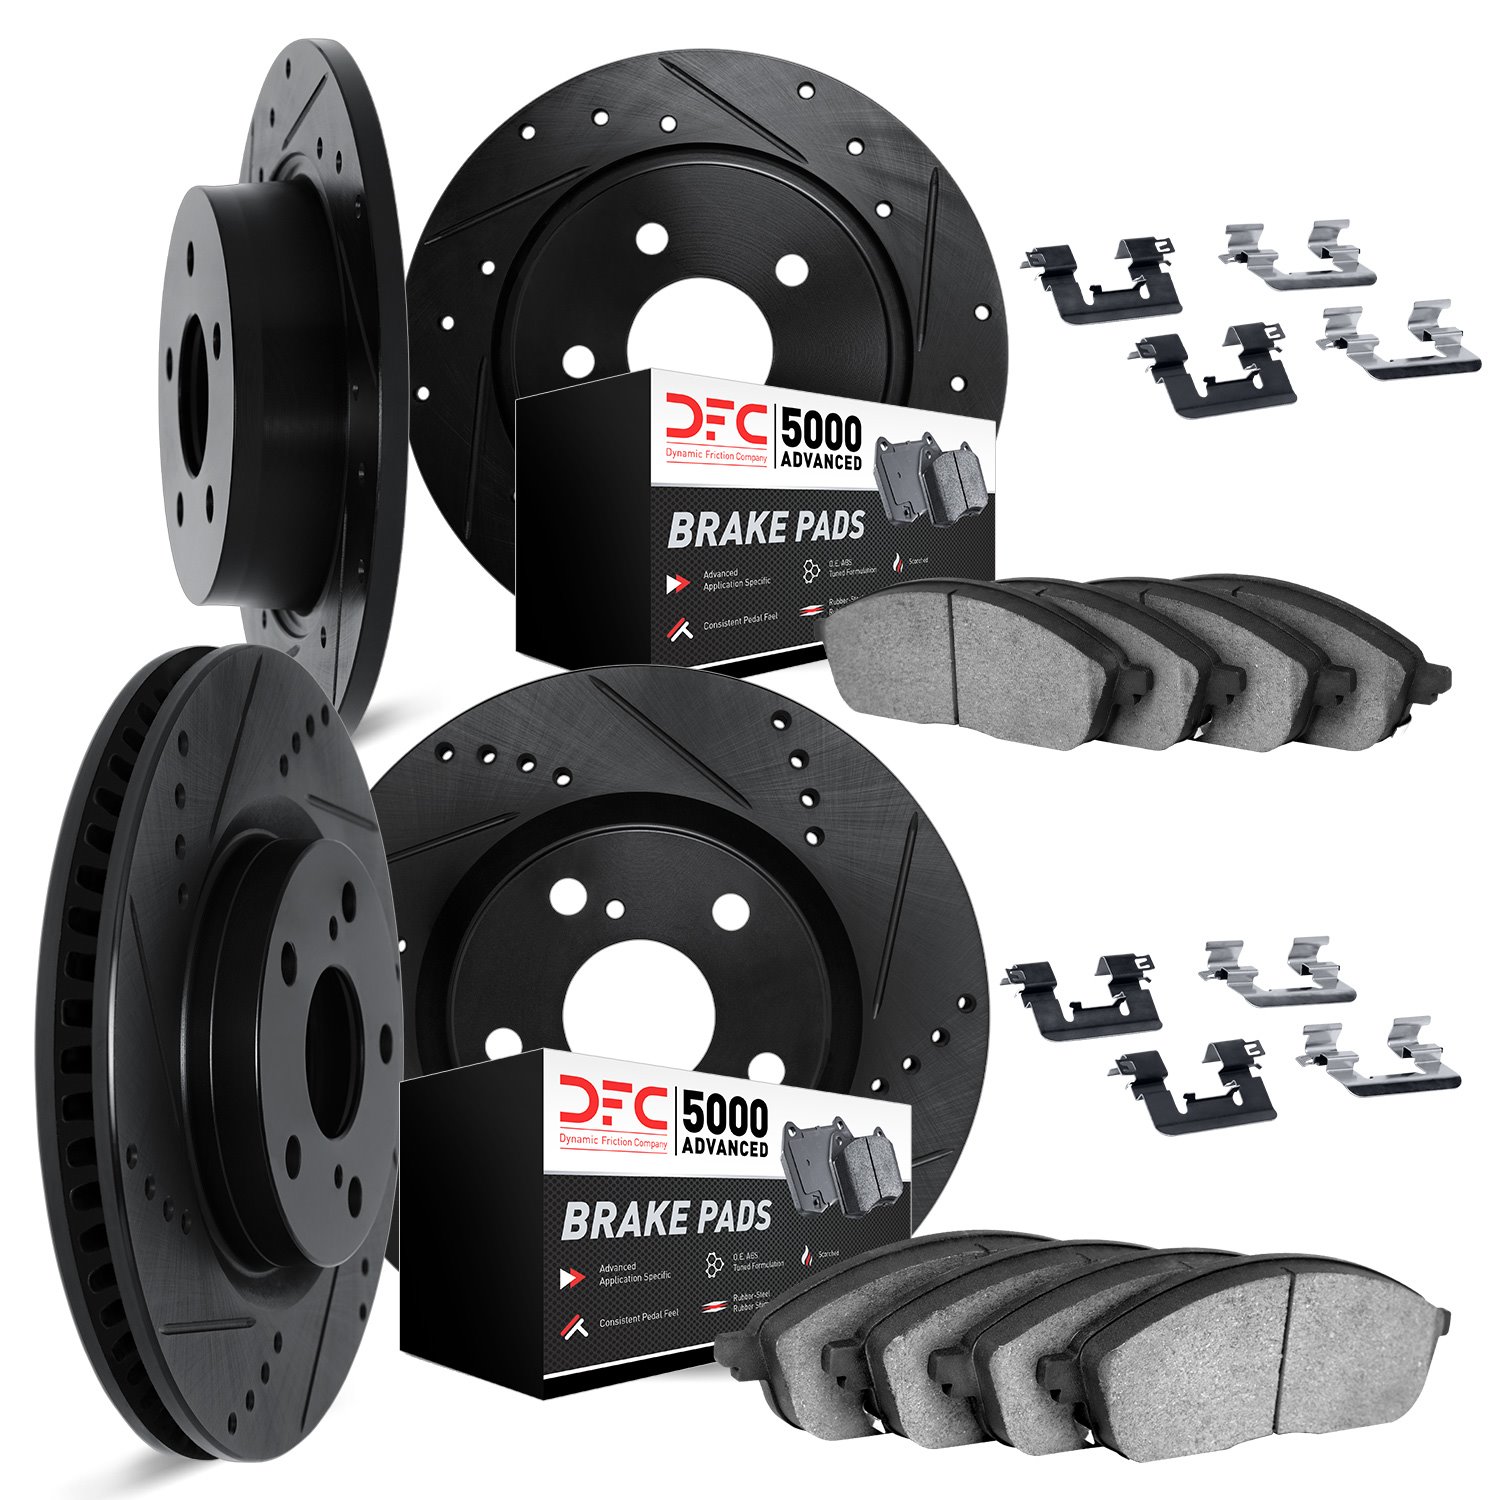 8514-76096 Drilled/Slotted Brake Rotors w/5000 Advanced Brake Pads Kit & Hardware [Black], 2009-2015 Lexus/Toyota/Scion, Positio